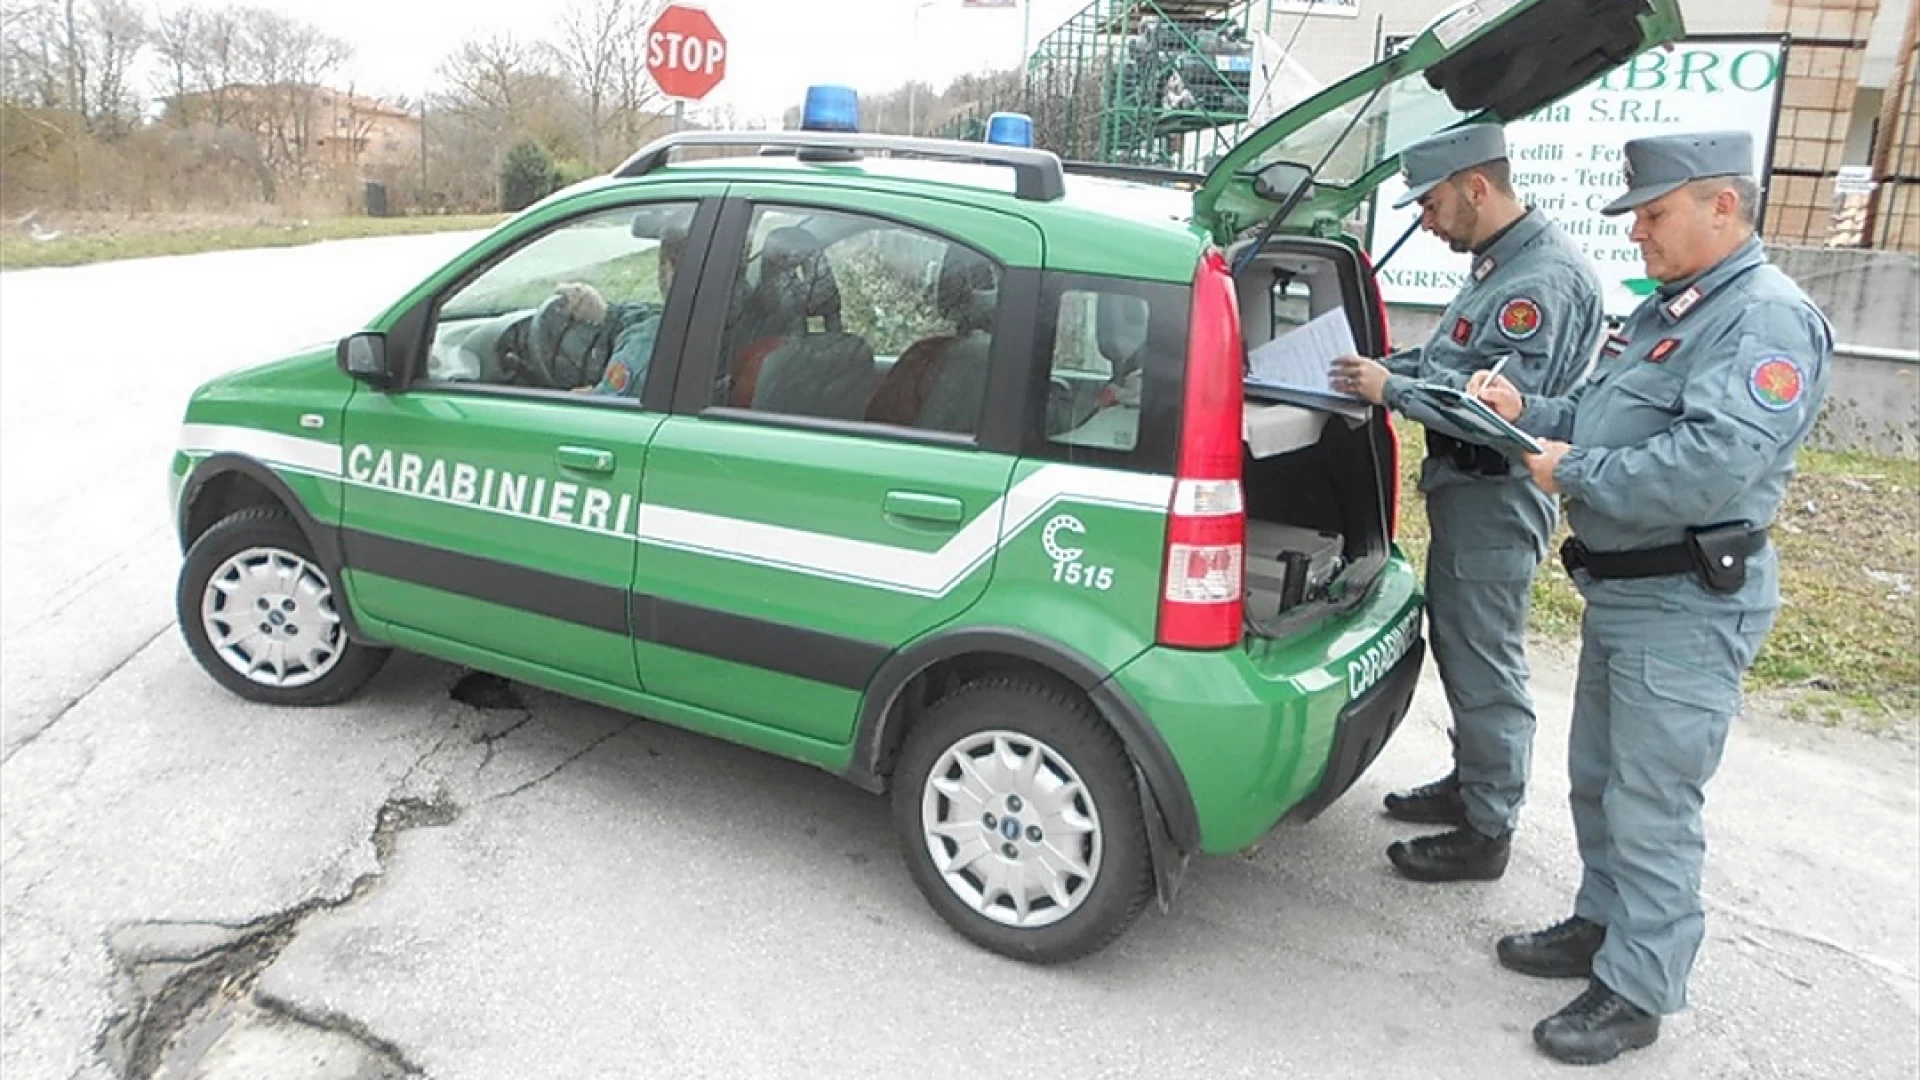 Venafro (IS): I Carabinieri denunciano una persona per appropriazione indebita. 